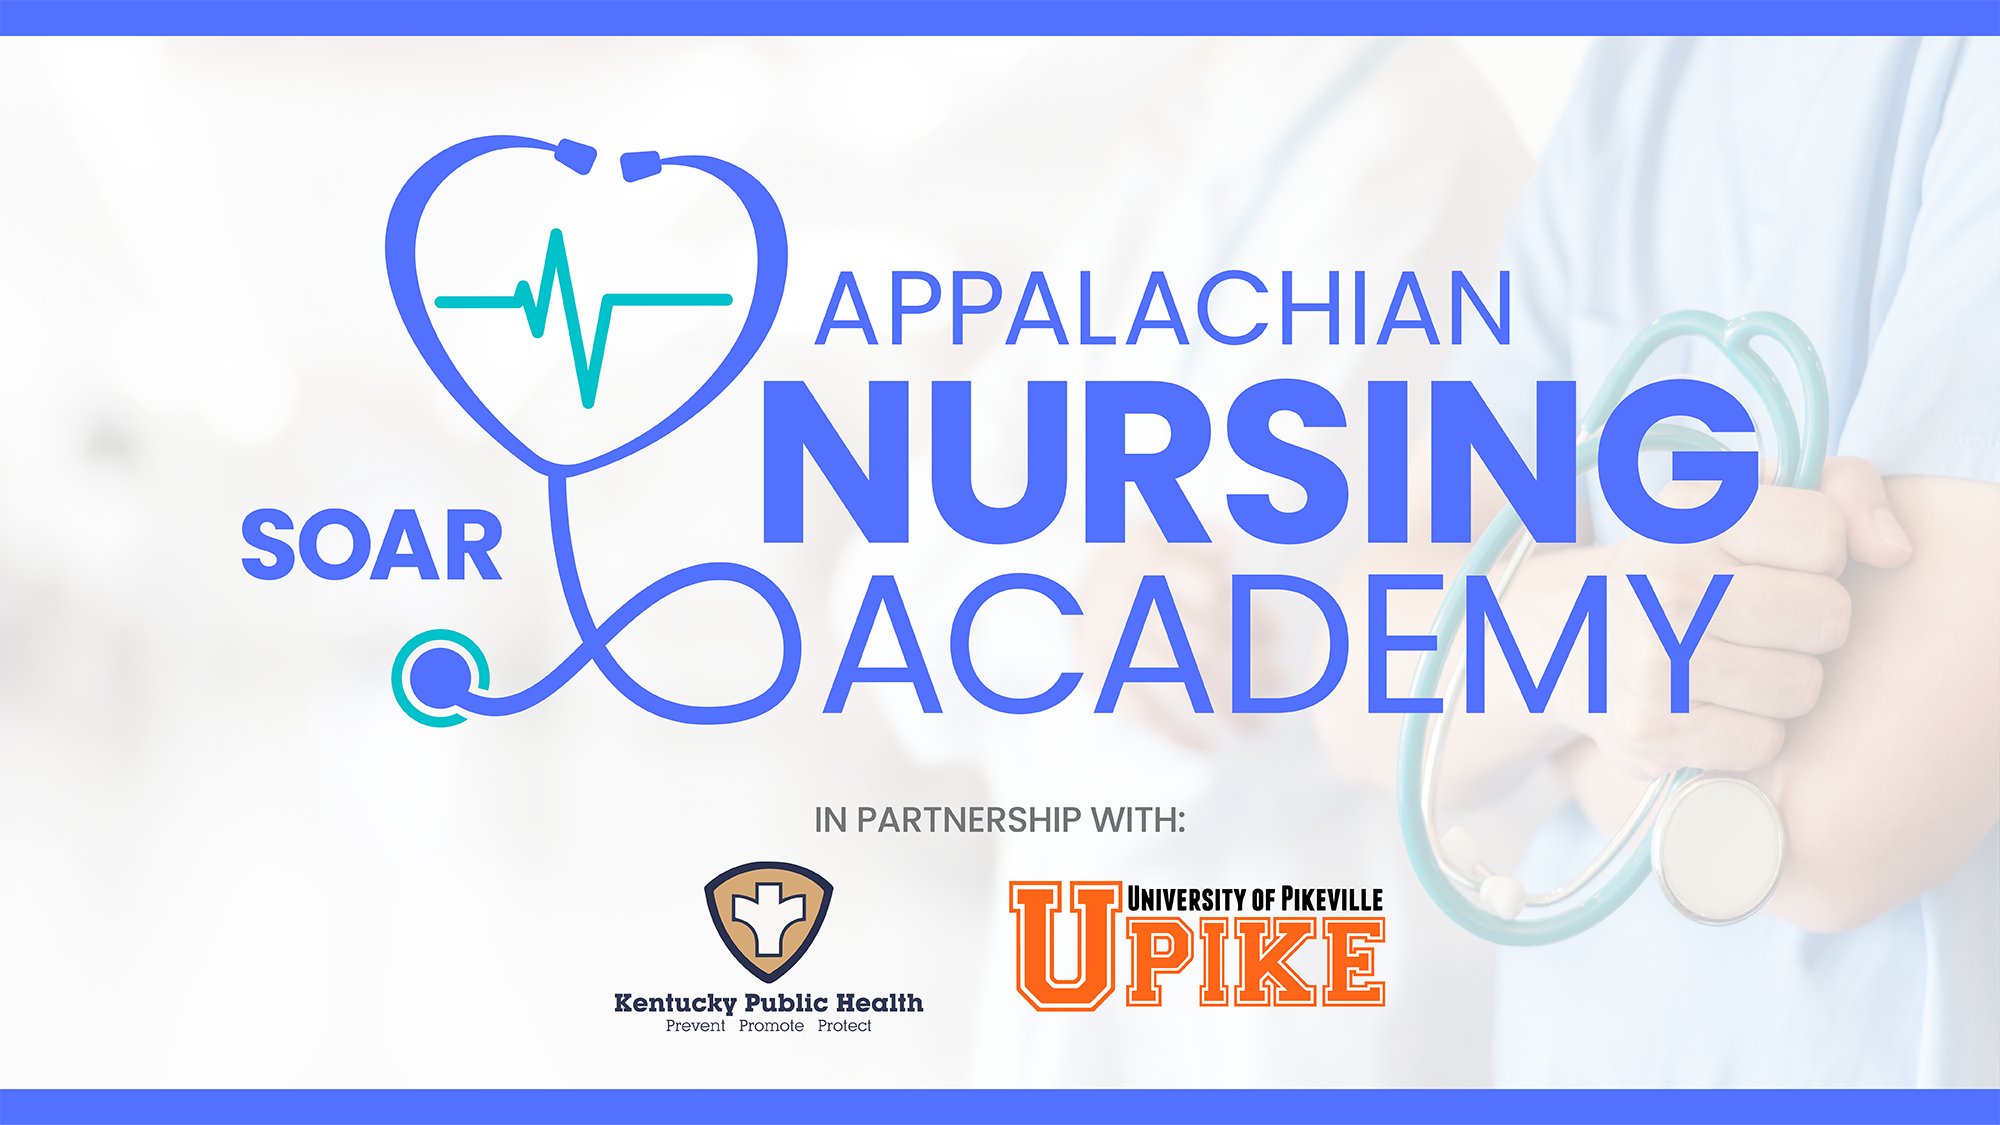 Appalachian Nursing Academy for high school juniors and seniors extends application deadline to April 15